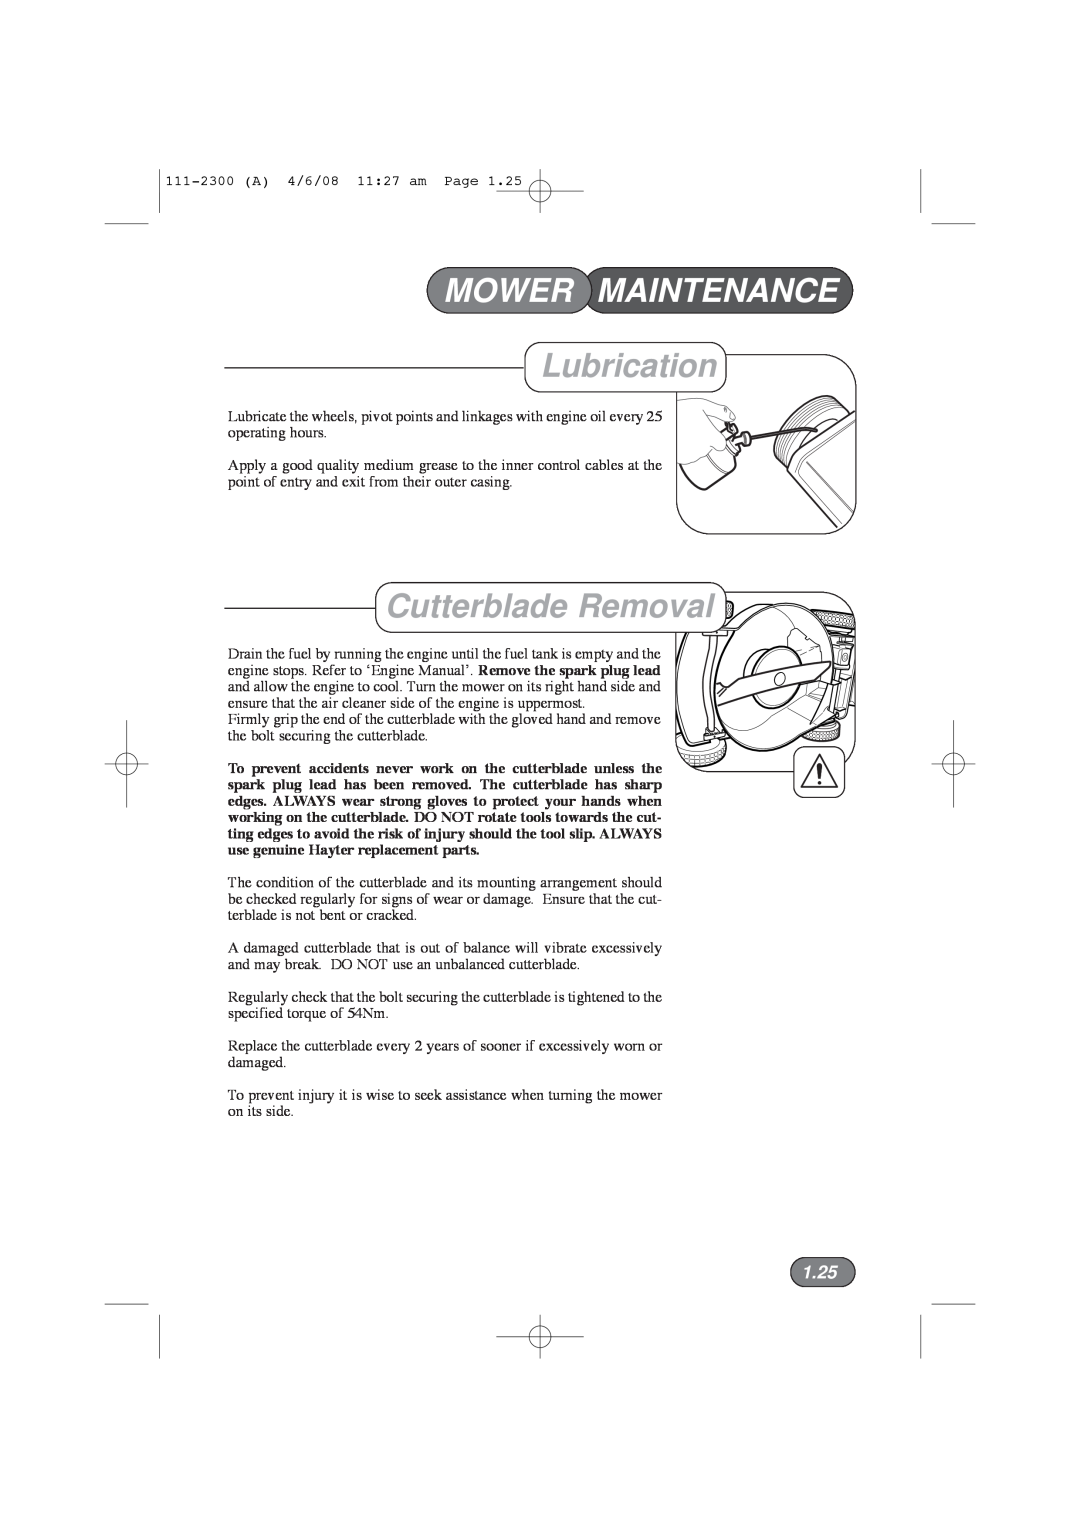 Hayter Mowers 43F manual Lubrication, Cutterblade Removal, 1.25, Mower Maintenance 